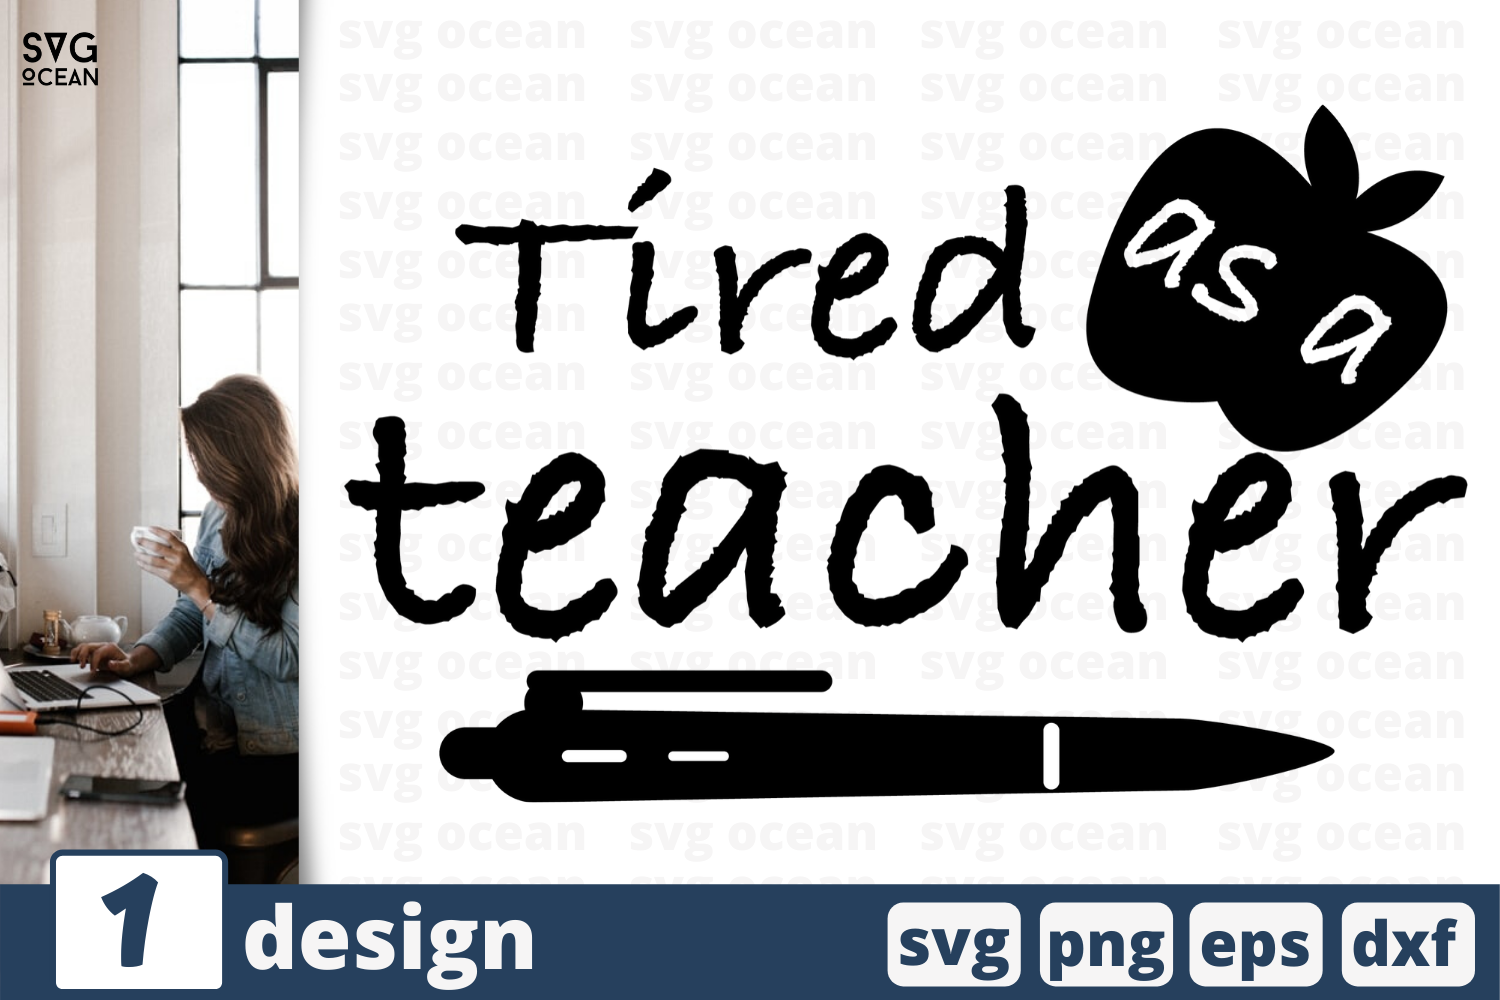 Download 1 TIRED TEACHER svg bundle, quotes cricut svg By SvgOcean ...